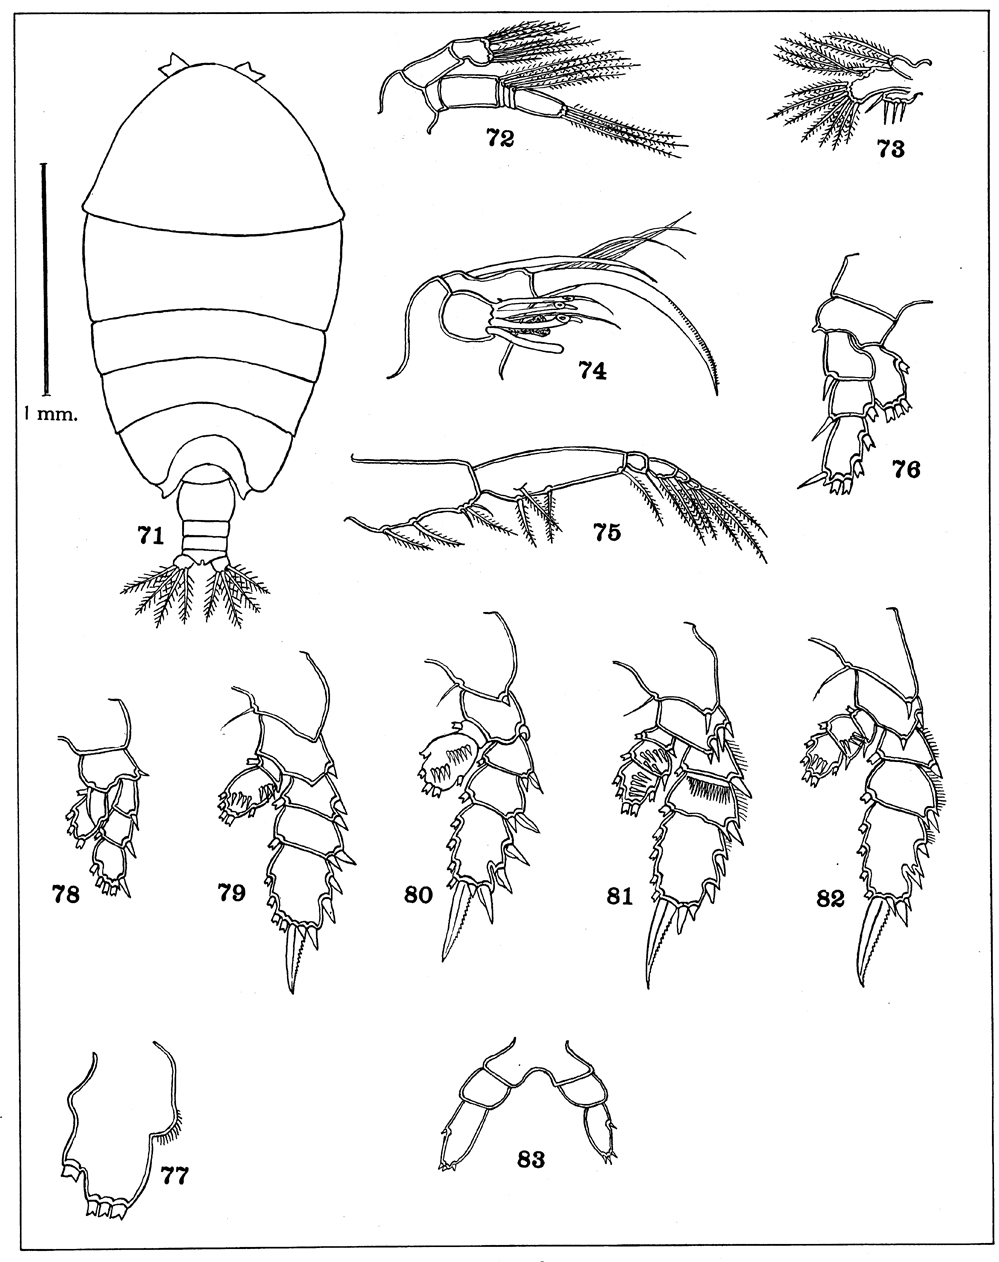 Species Phaenna spinifera - Plate 28 of morphological figures